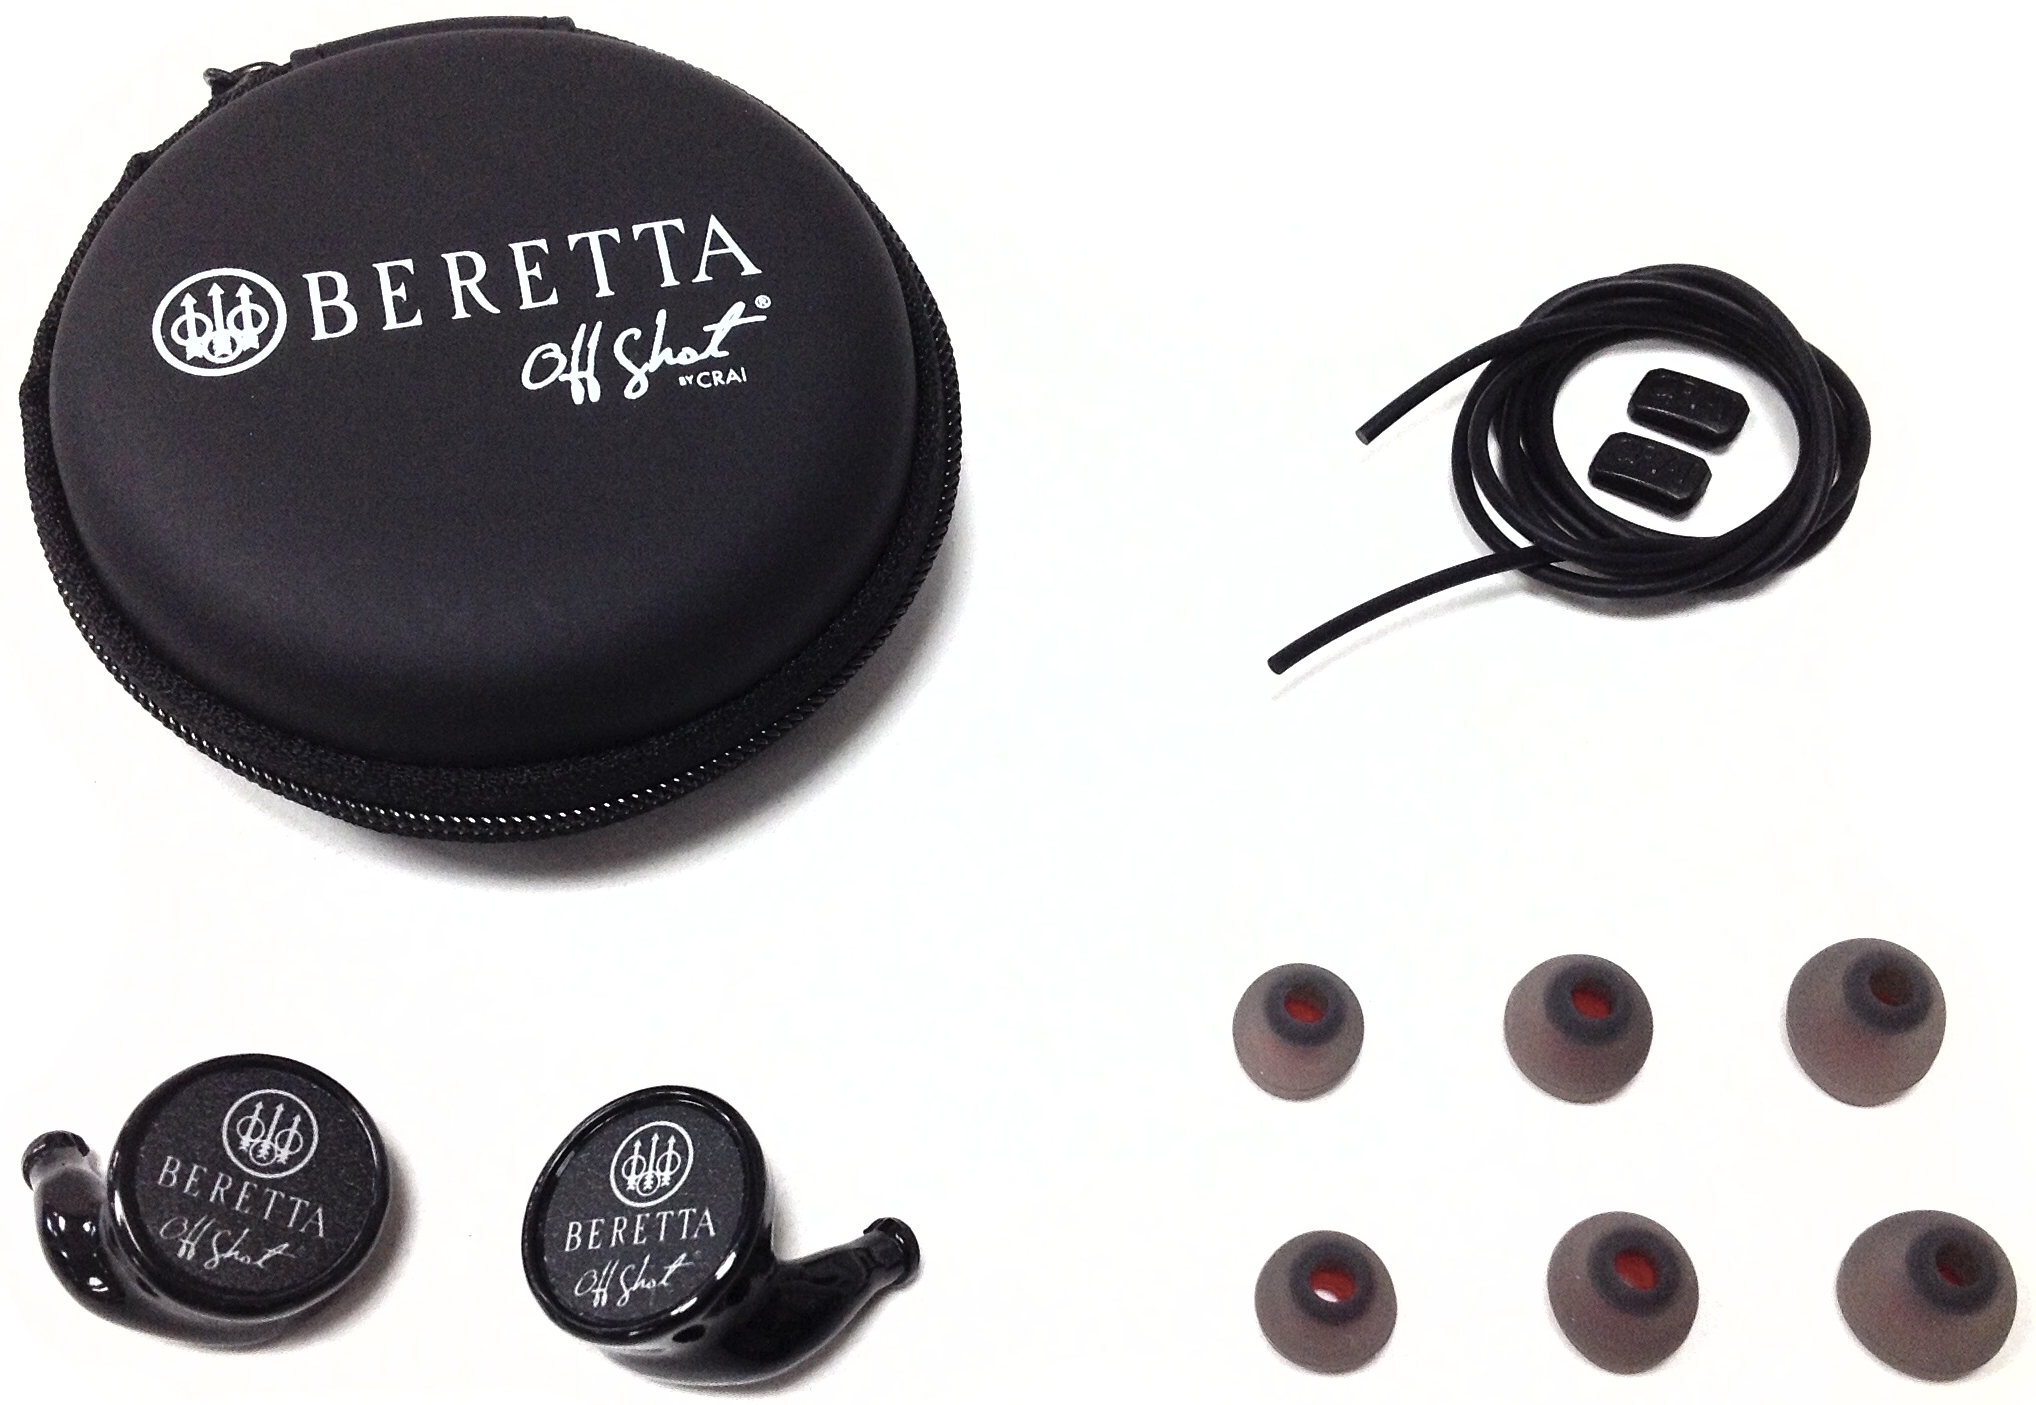 Beretta Mini Headset Comfort Plus Ear Plugs